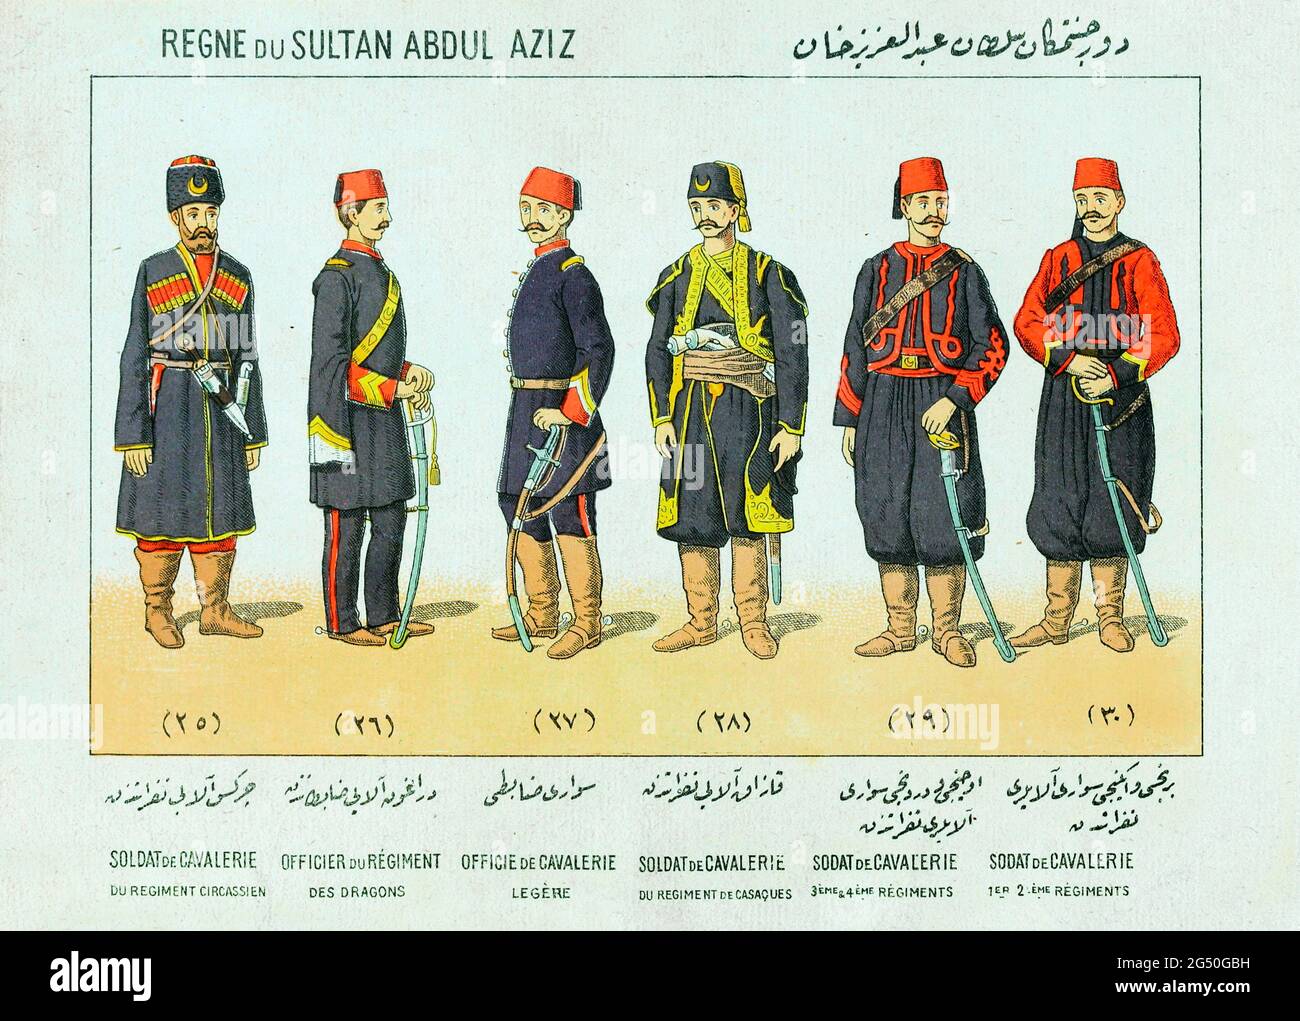 Illustrated history of Turkish Army (Ottoman Empire). Sultan Abdulaziz ...